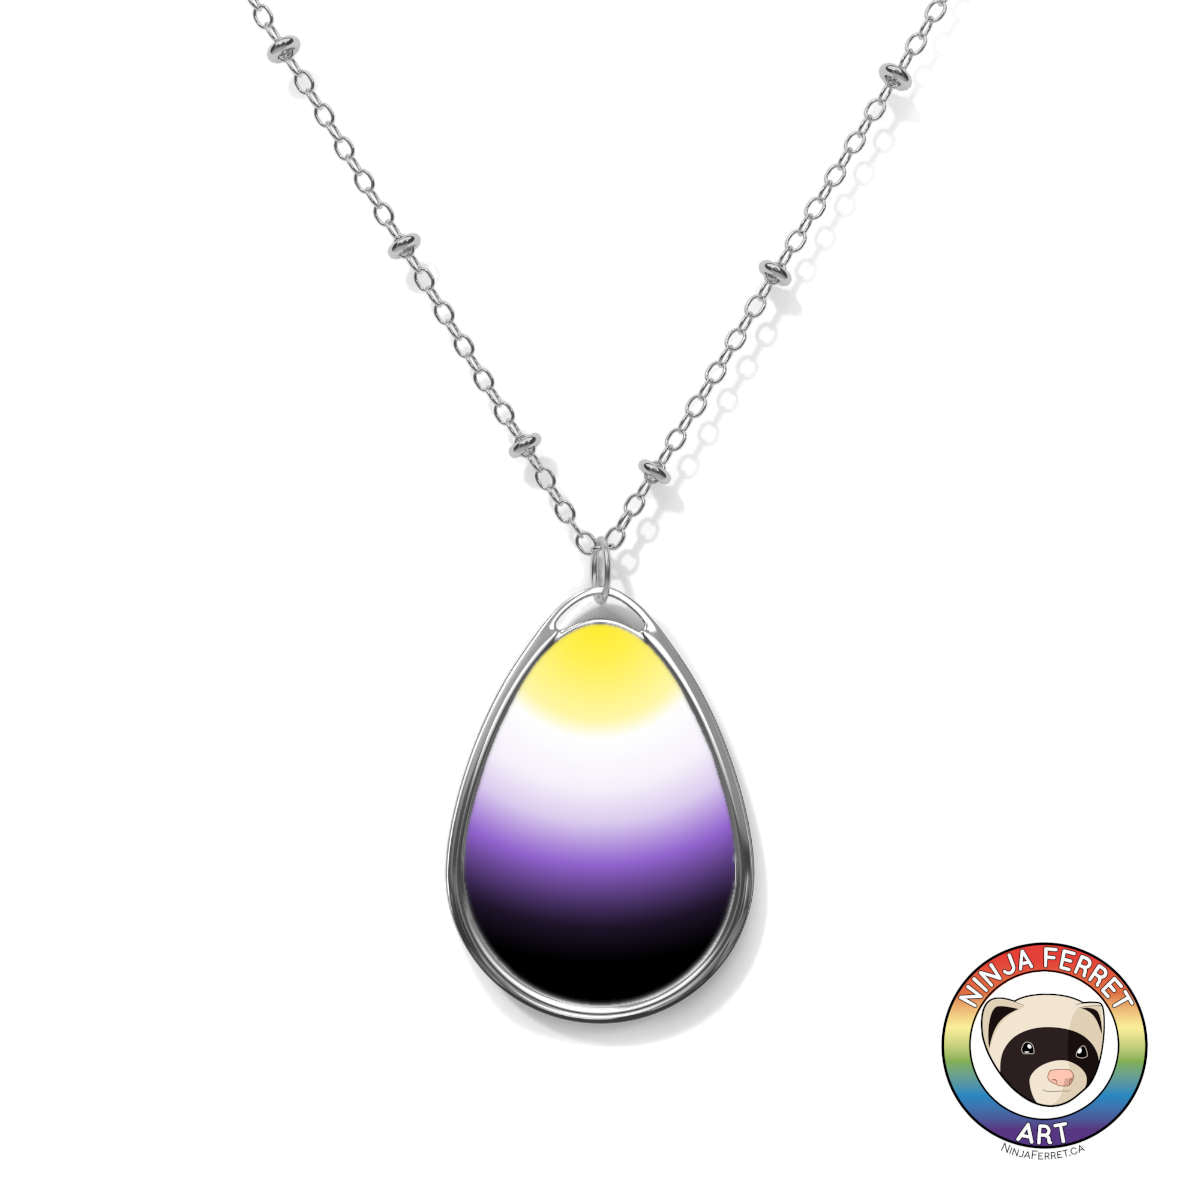 Gender Gradient Oval Necklace | Choose Your Gender Pride Flag Colourway